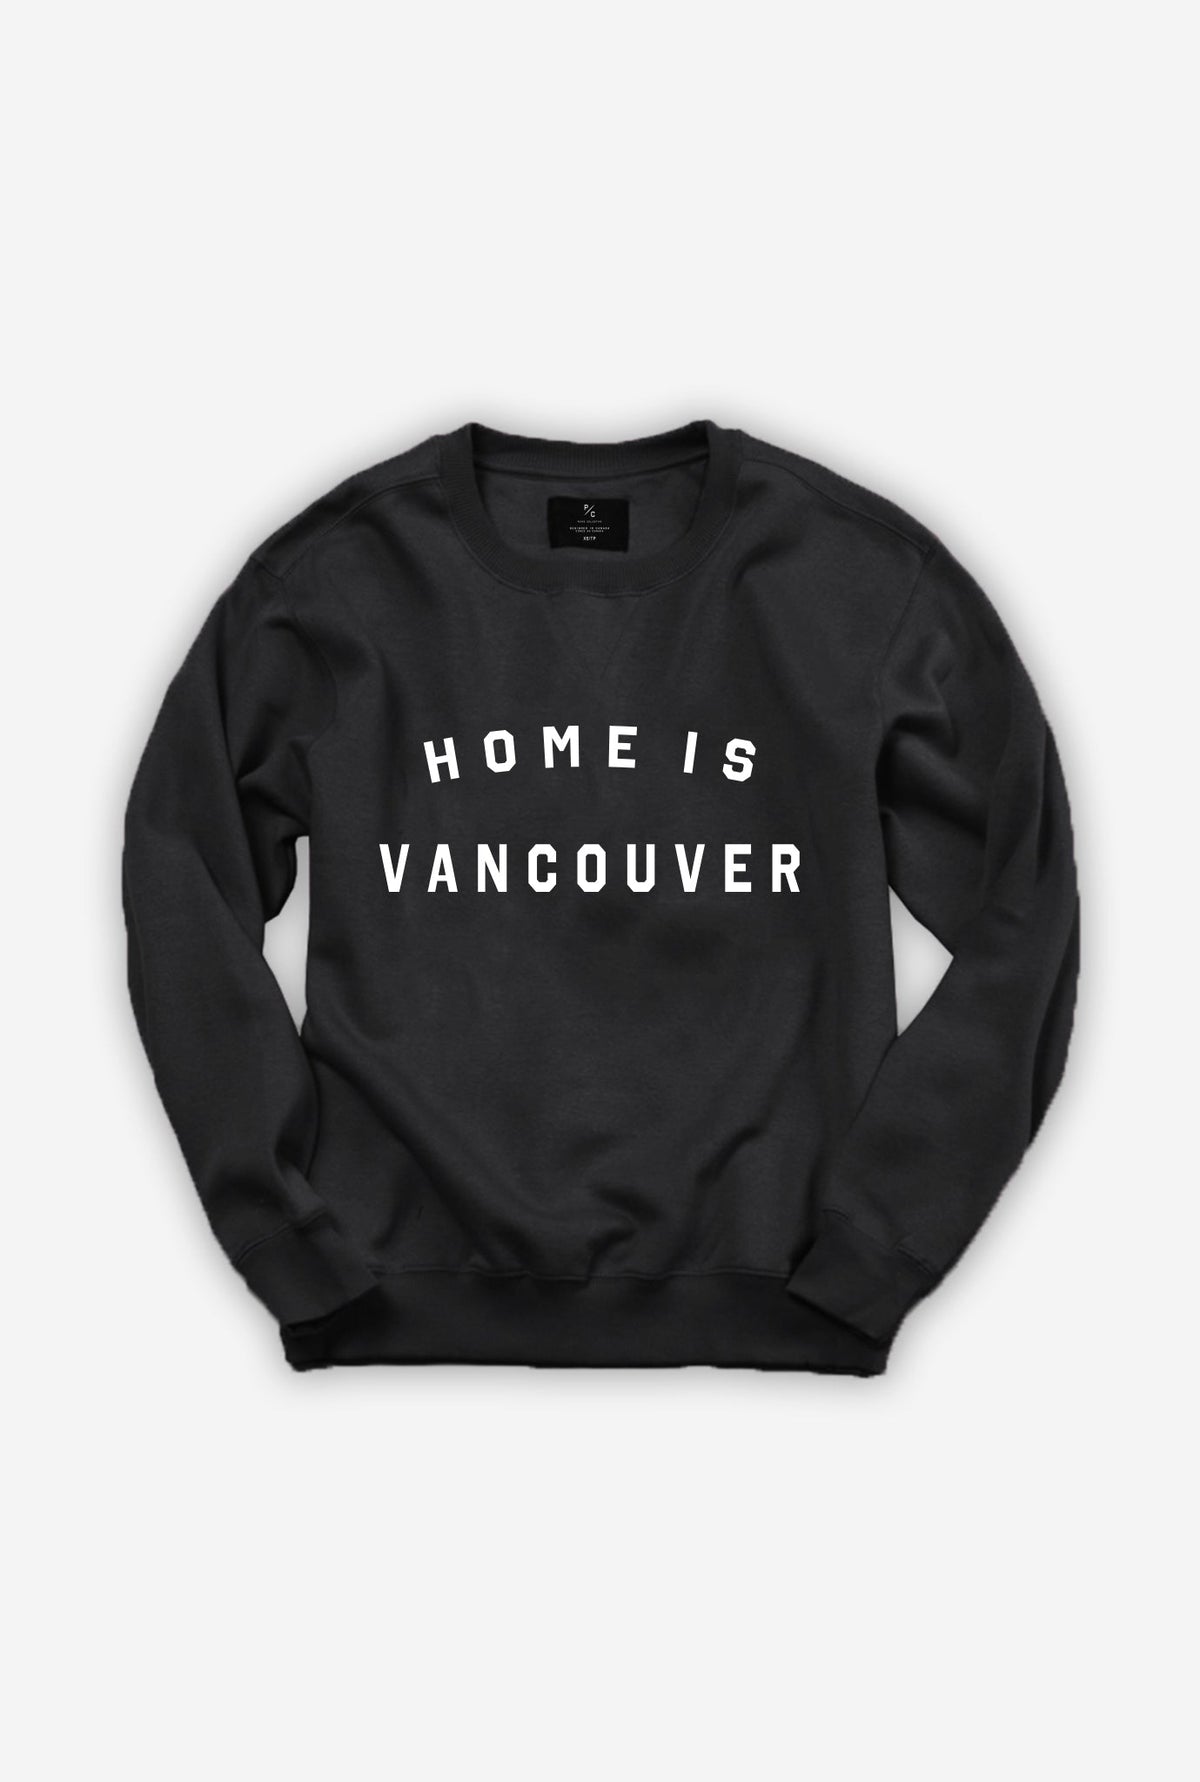 Home is Vancouver Crewneck - Black